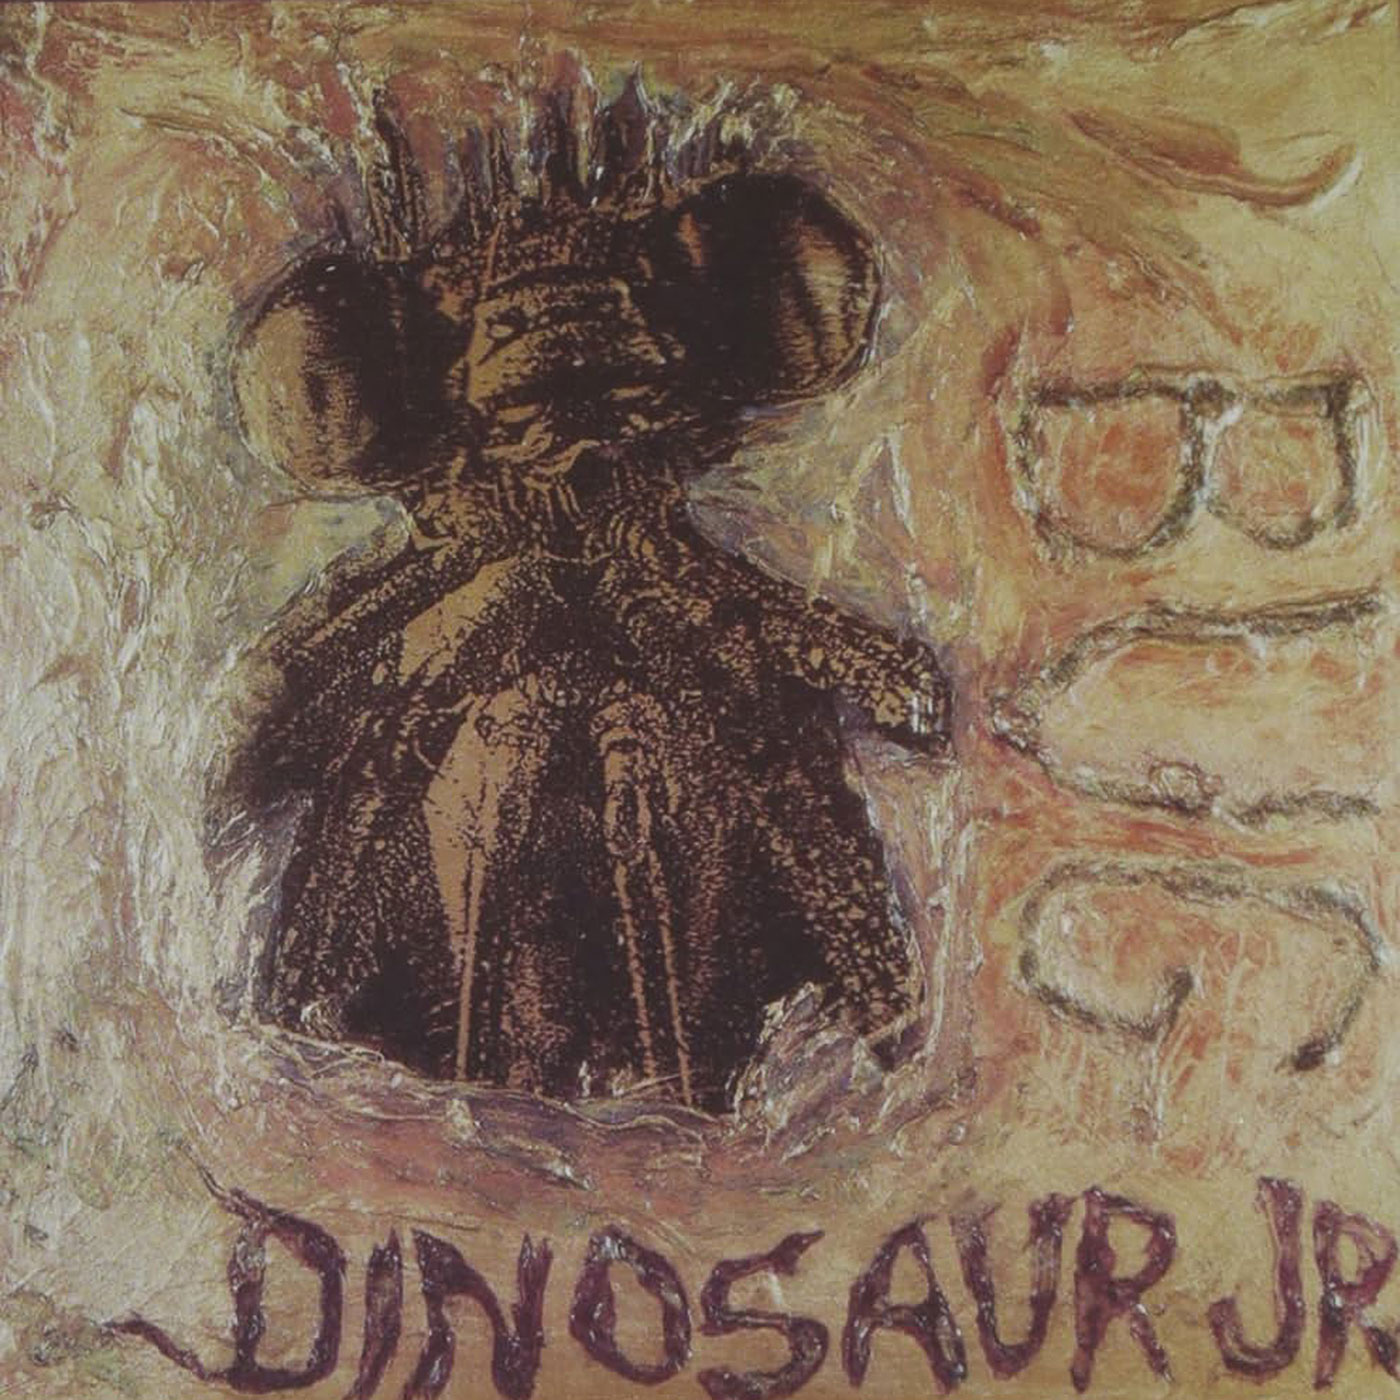 626 Dinosaur Jr. – Bug